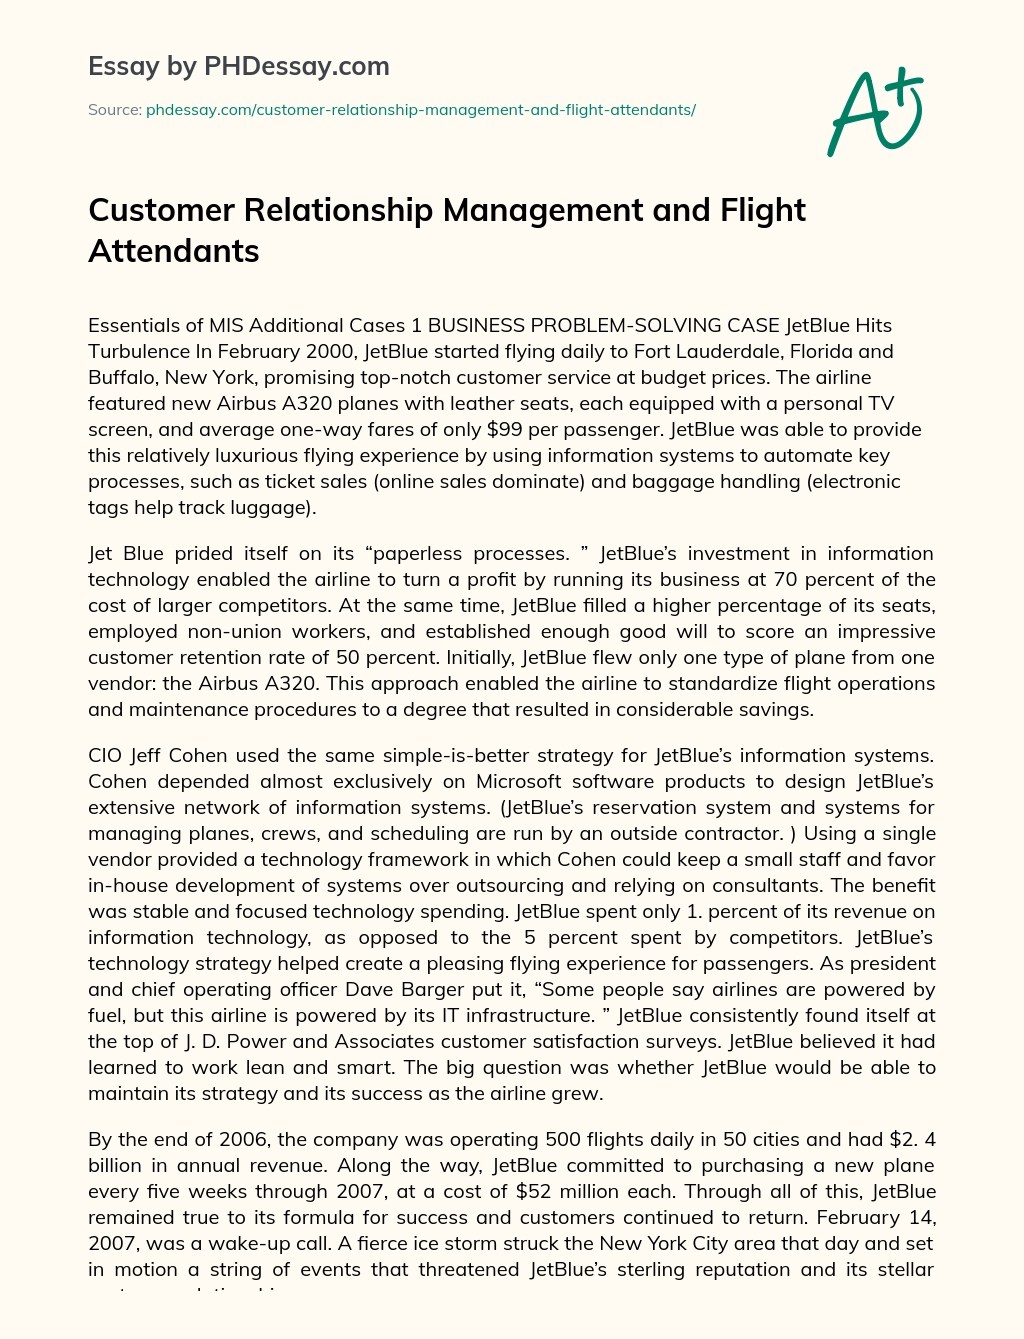 Customer Relationship Management and Flight Attendants essay